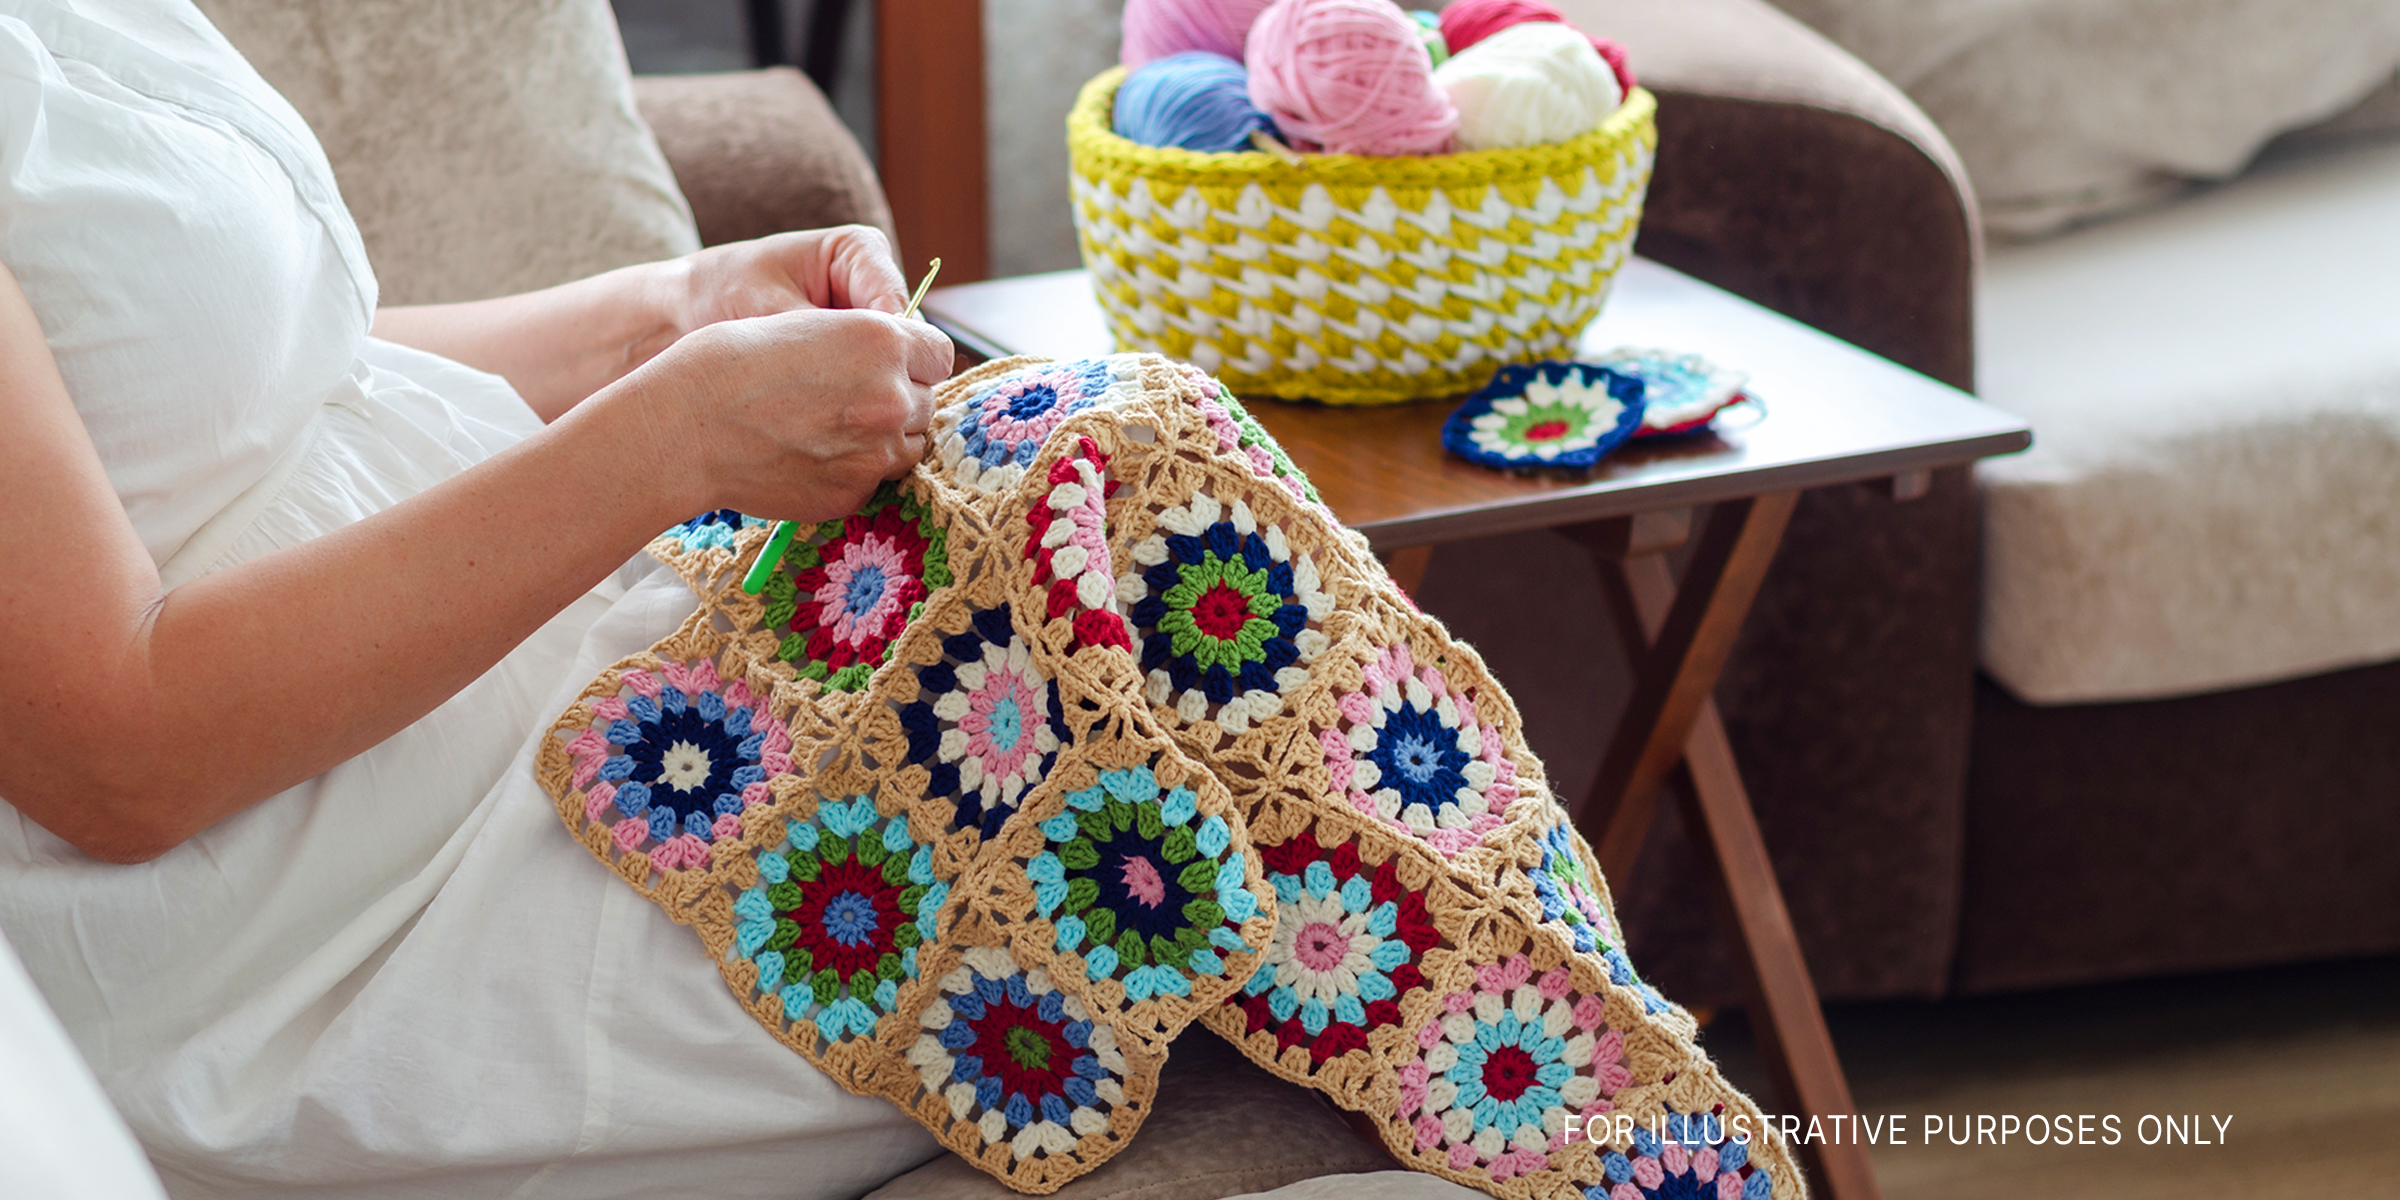 Woman crocheting a baby blanket | Source: Shutterstock